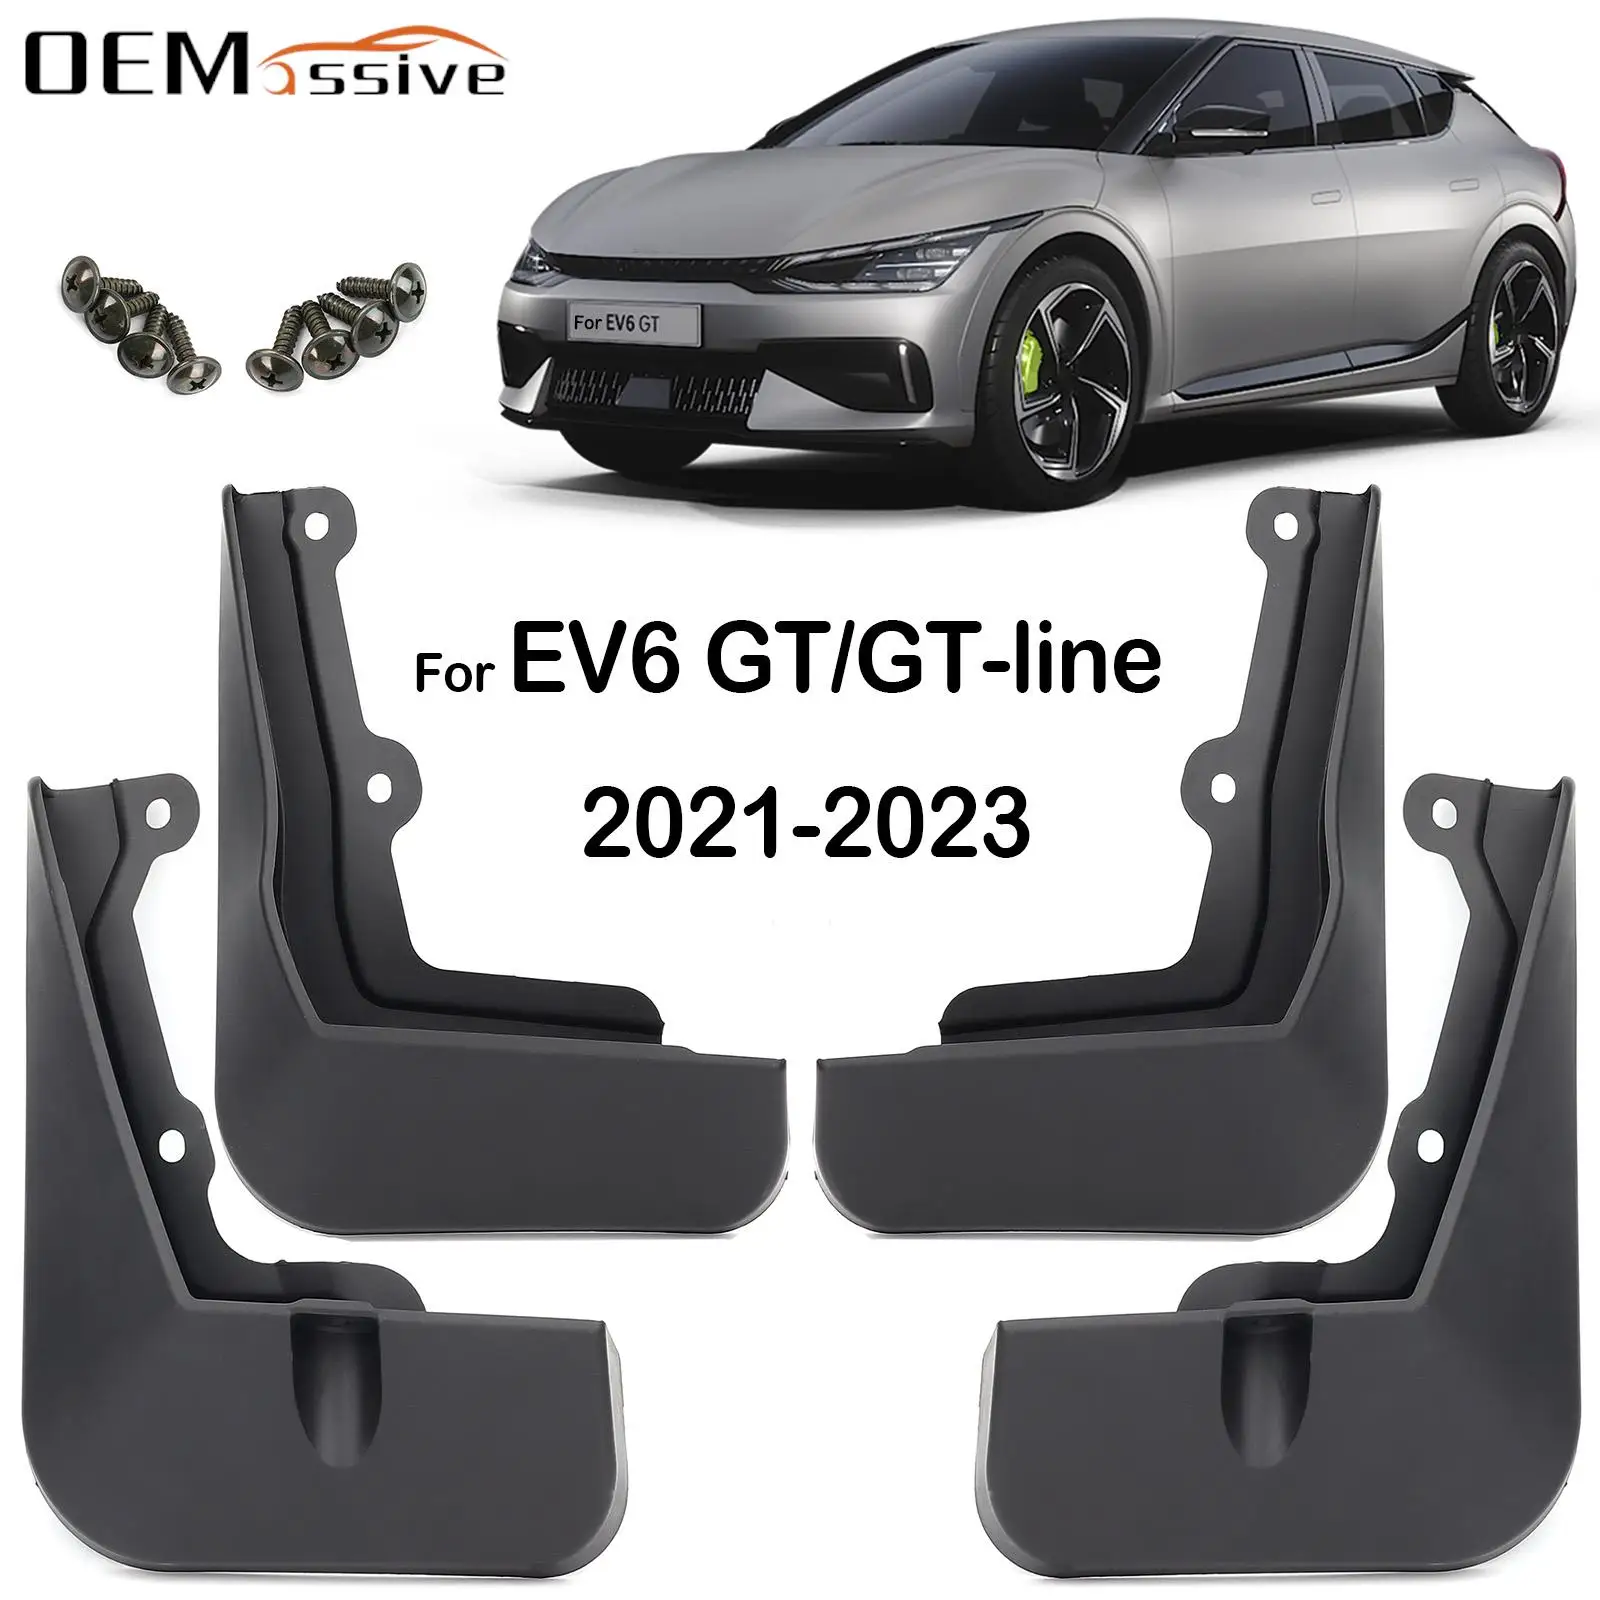 

Set of 4x For Kia EV6 GT-Line GT Line CV EV 2021 2022 2023 Mud Flaps Splash Guard Mudguards Front Rear Fender Car Styling